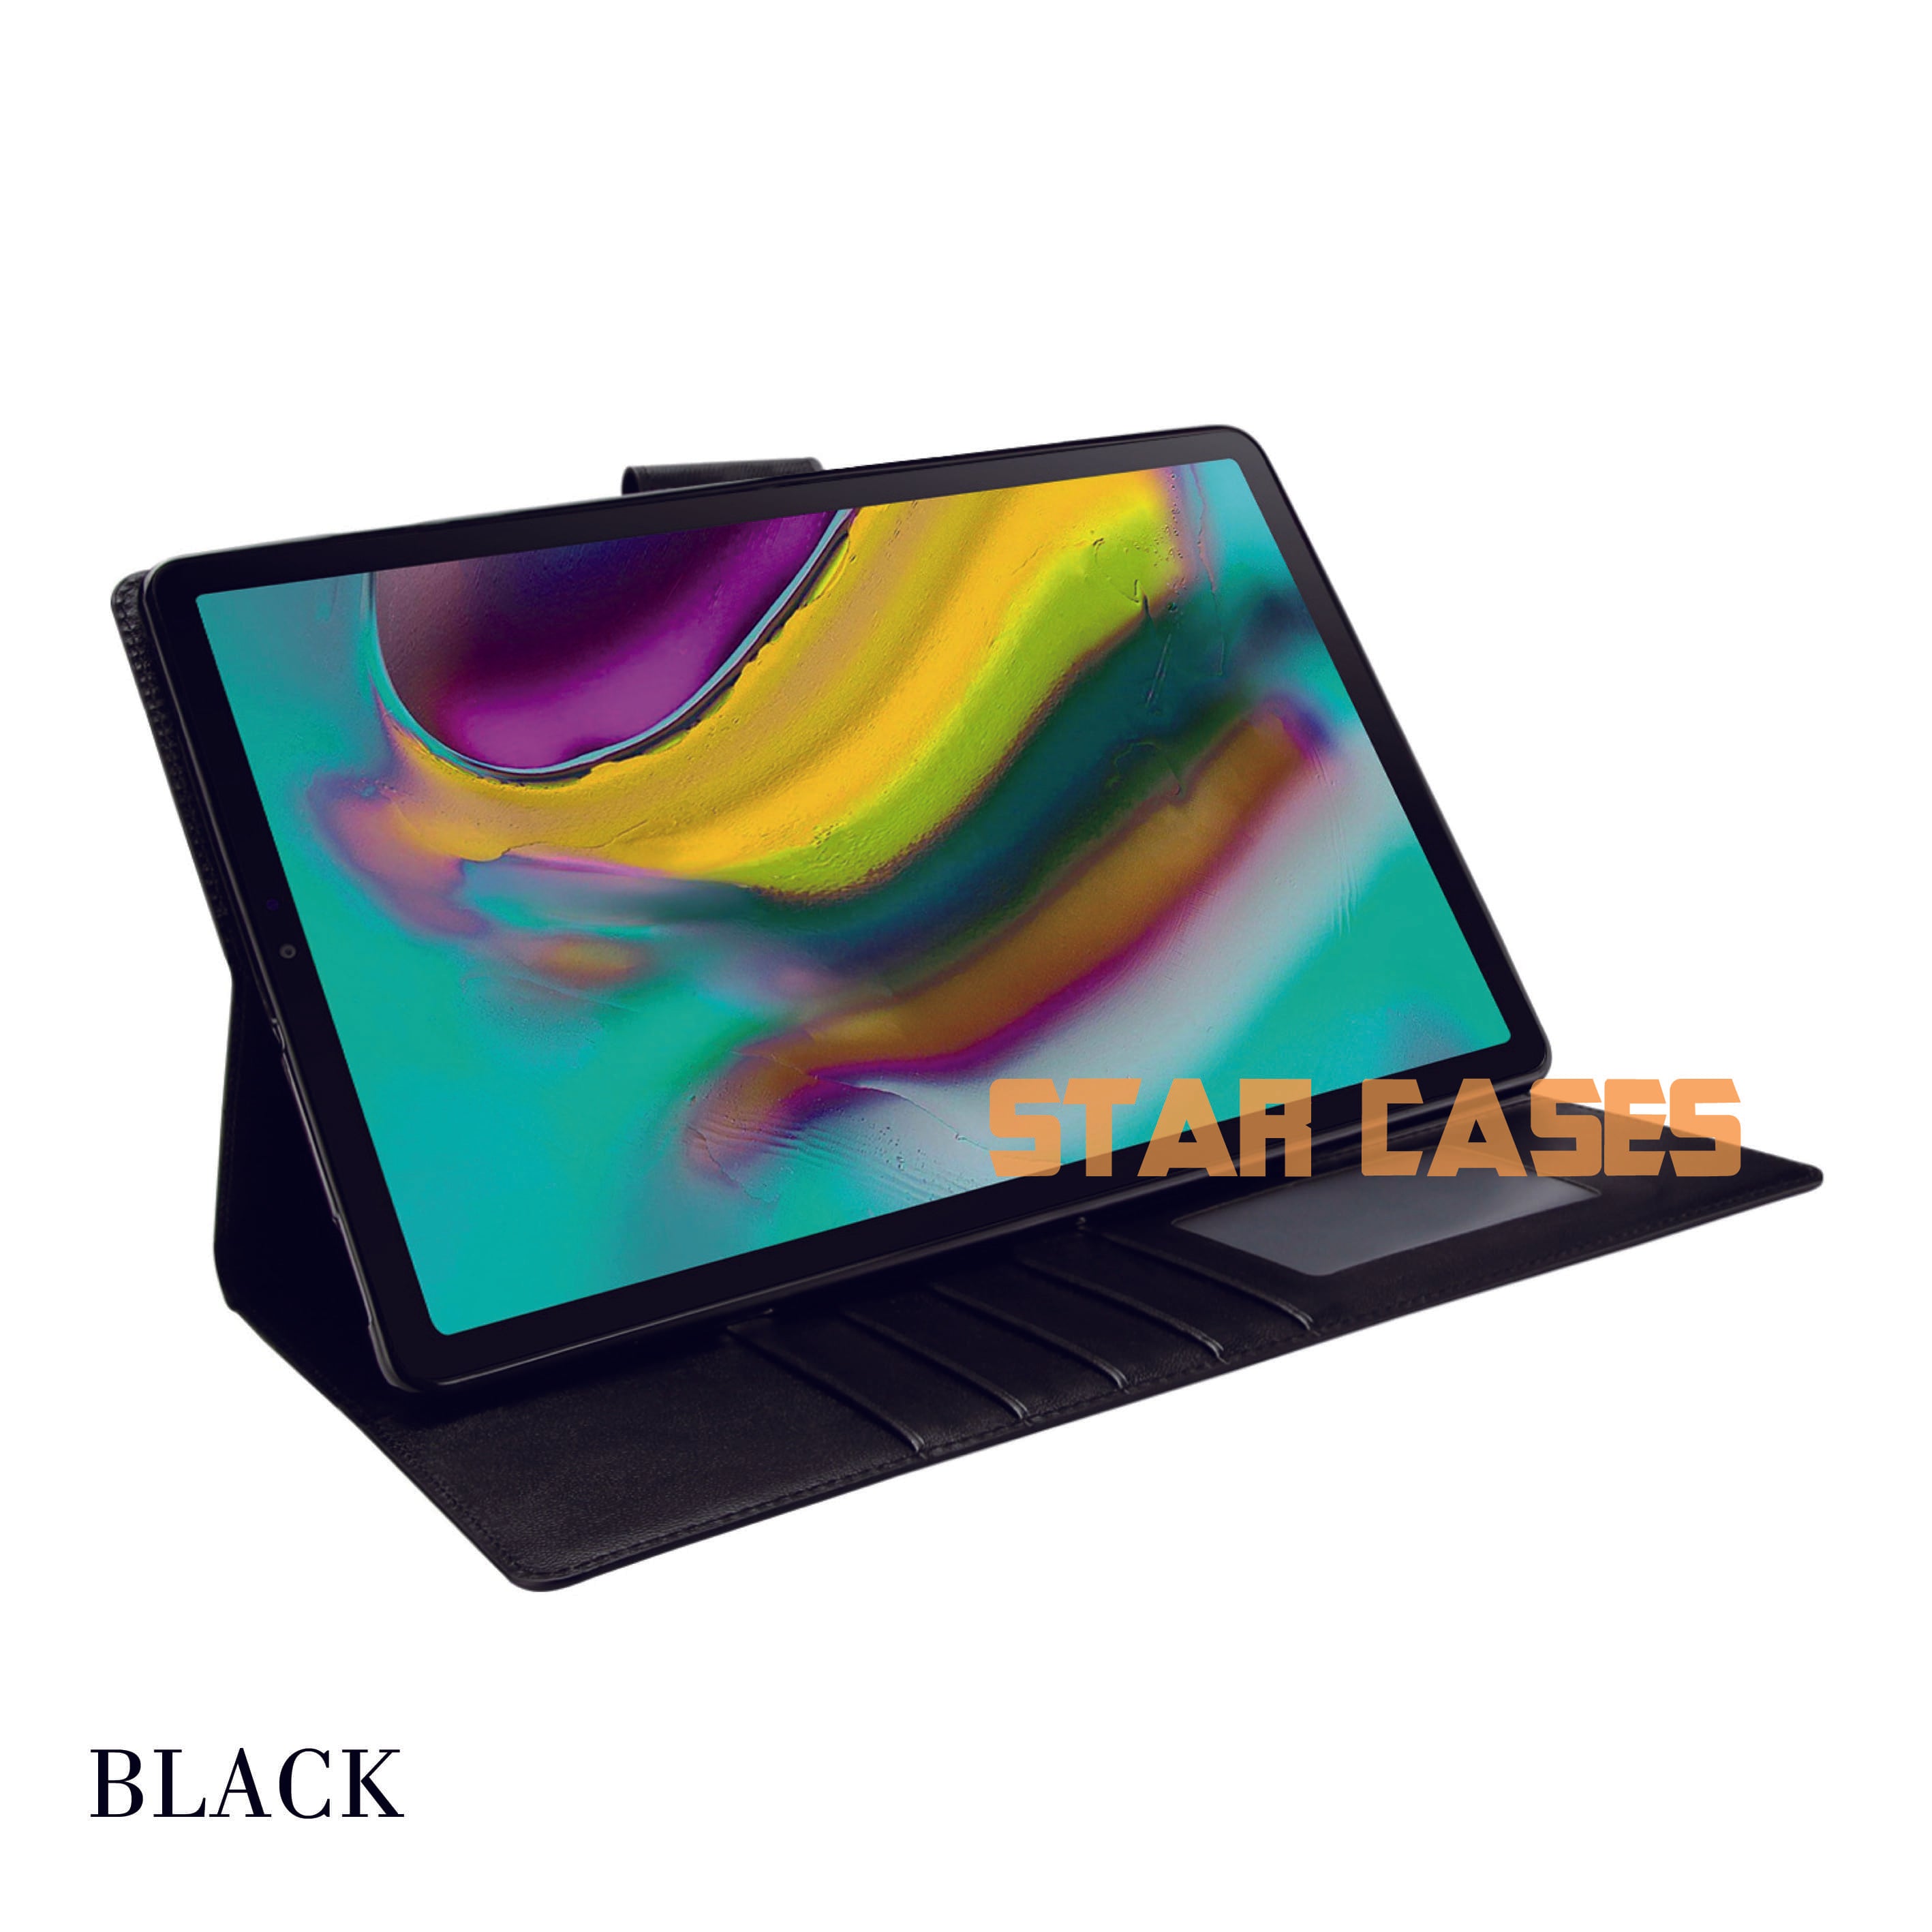 Samsung Tab T290/T295 Tablet Hanman Flip Wallet Case